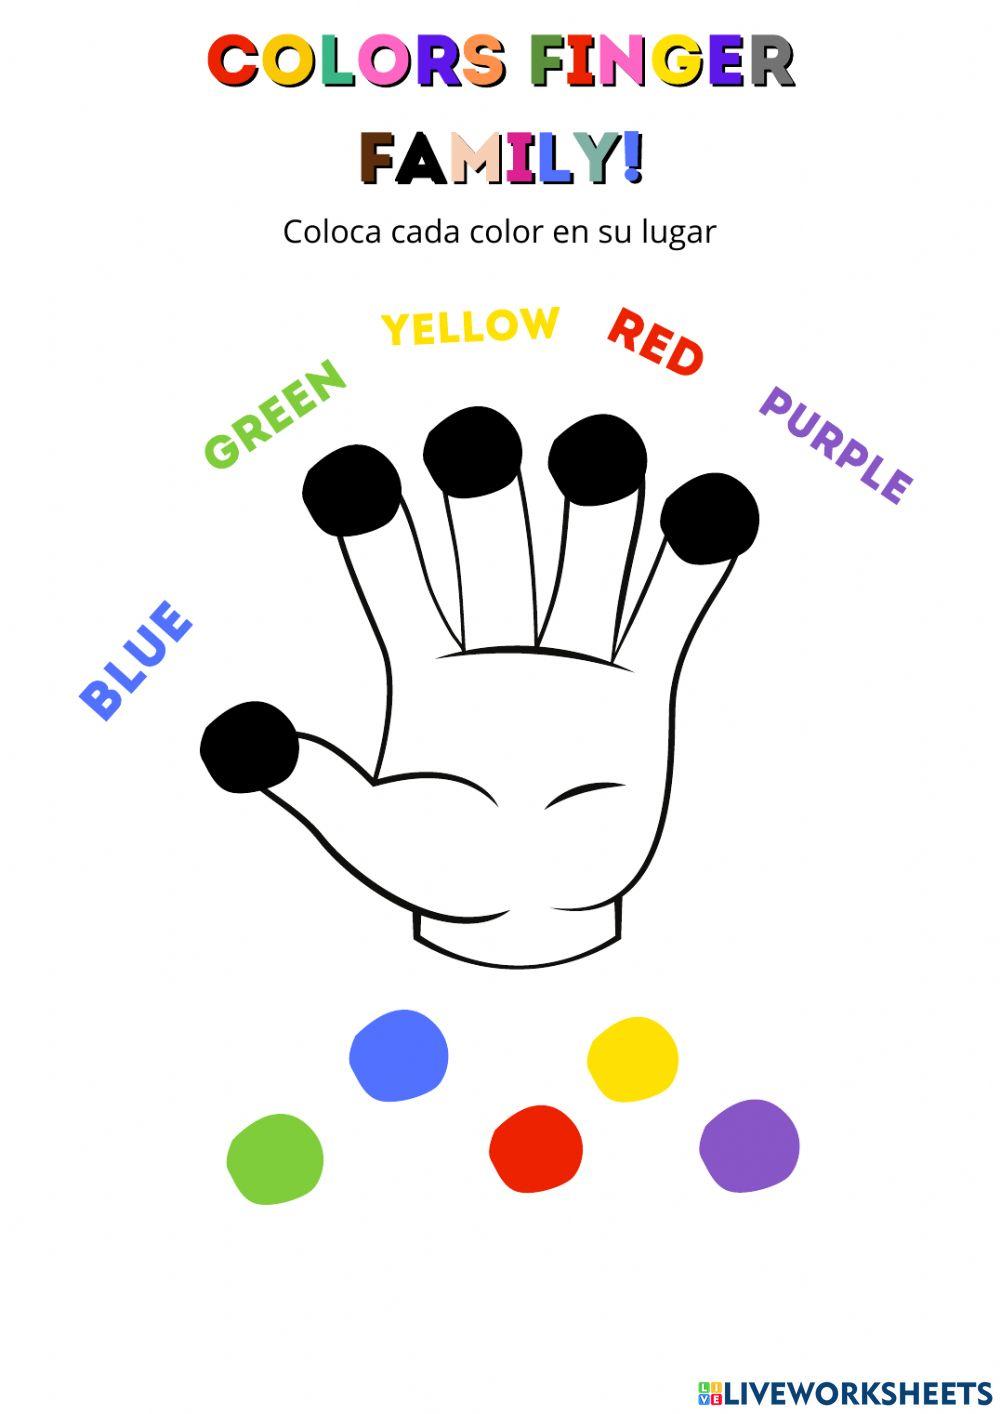 Colors finger family